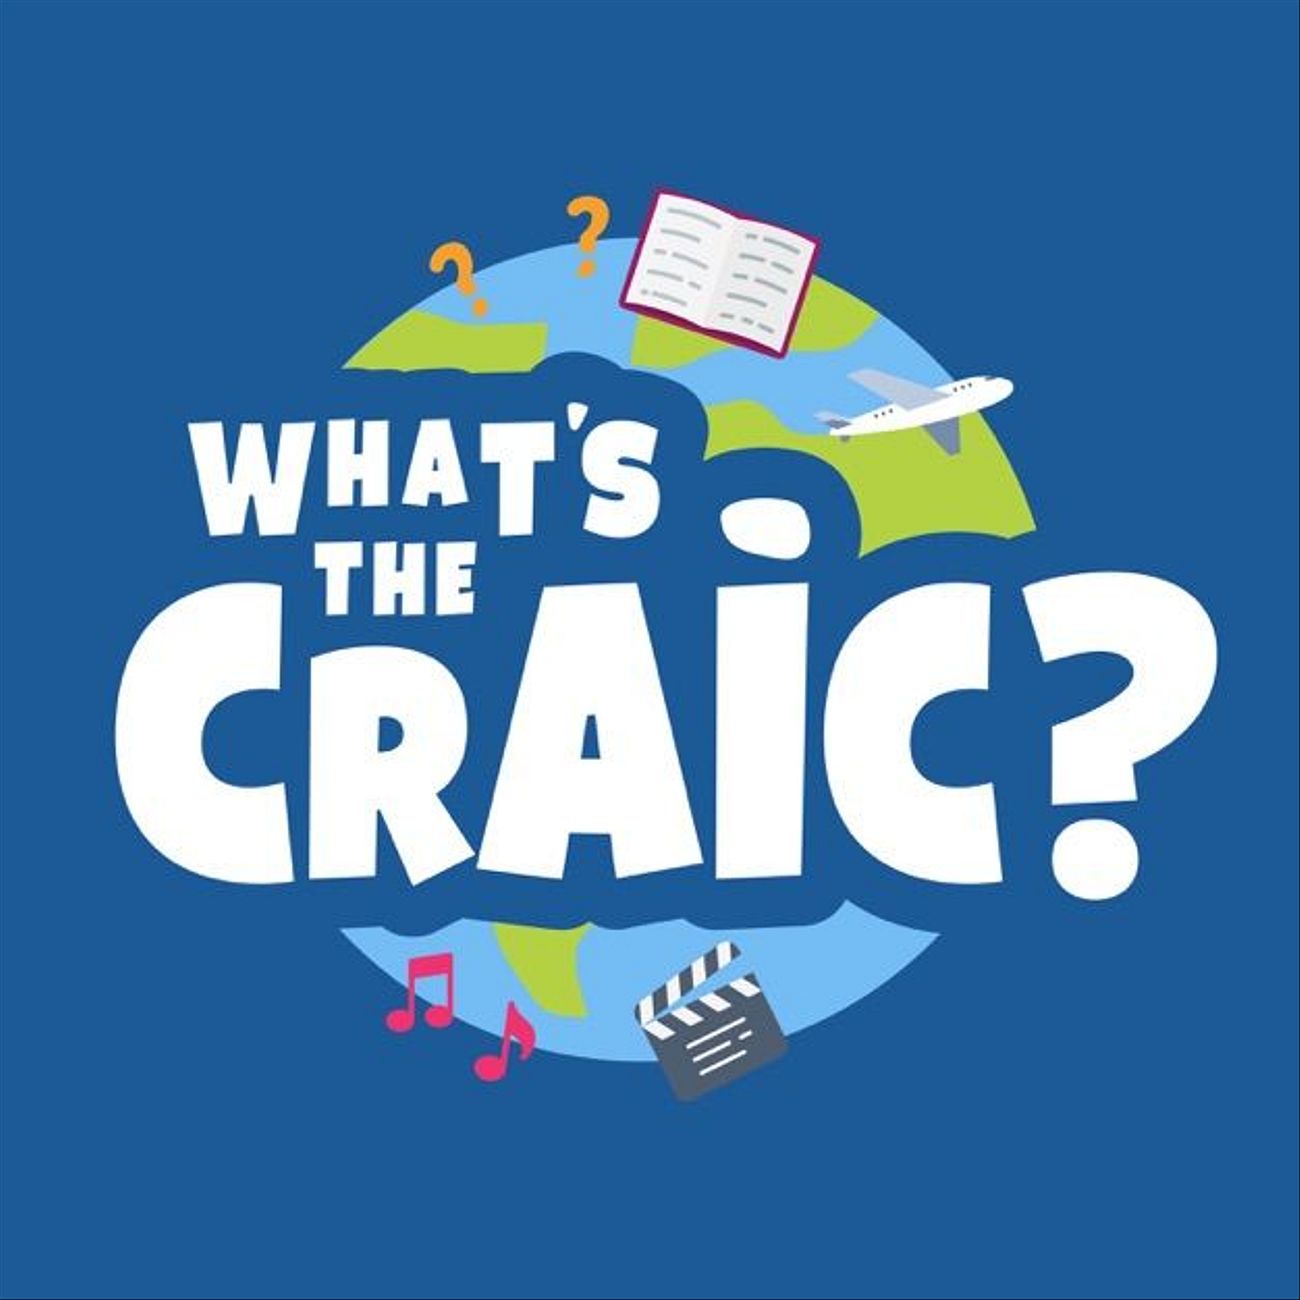 What's The Craic?